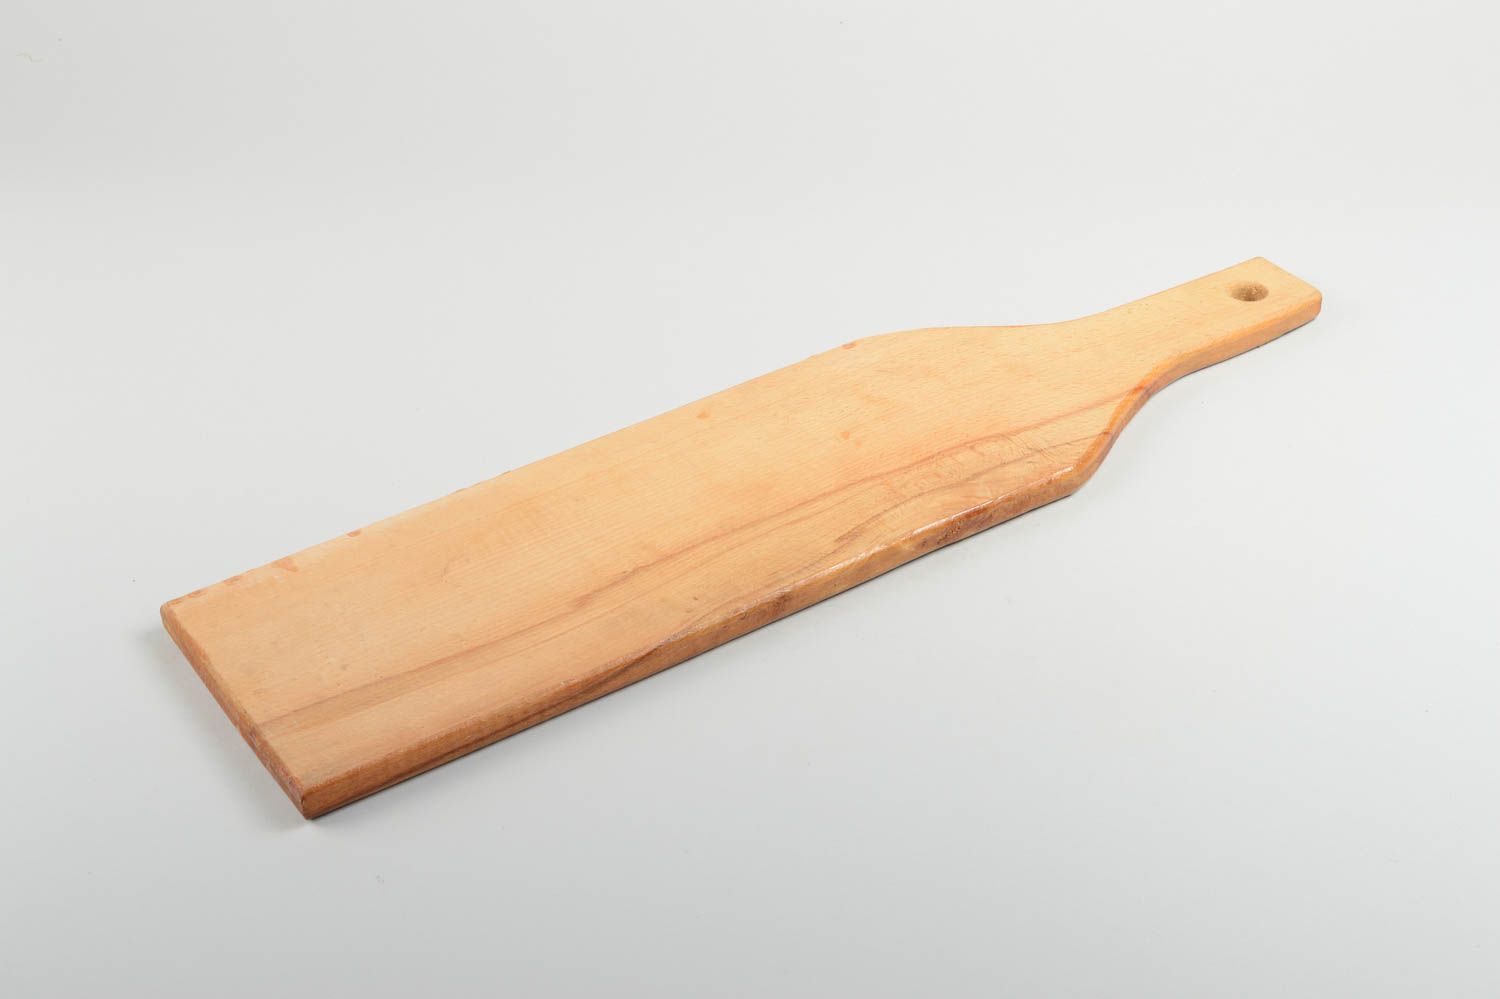 Wooden cutting board handmade designer accessories stylish unusual kitchen decor photo 3